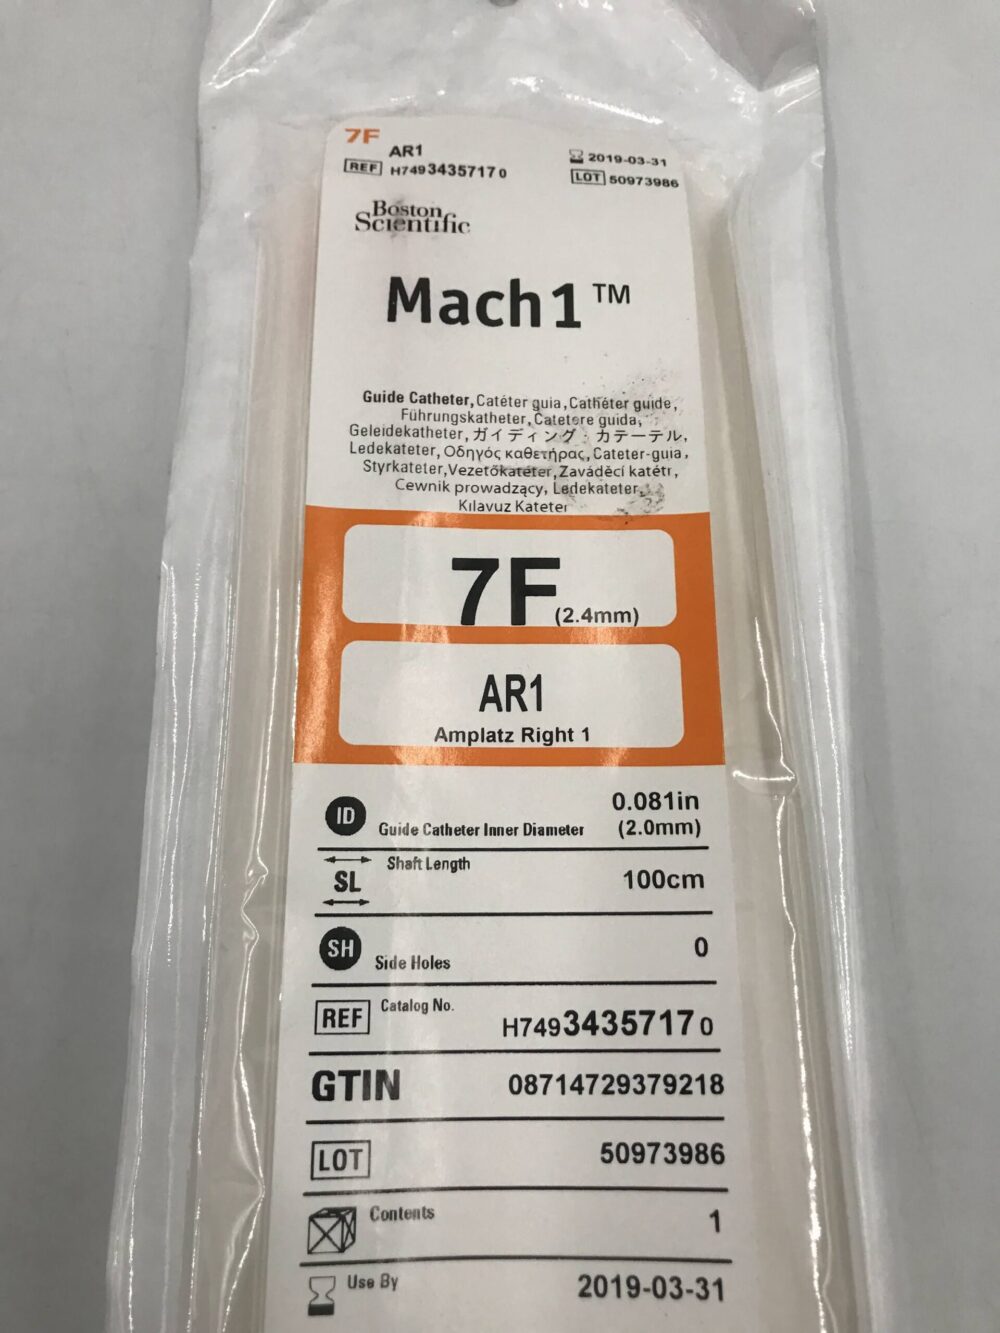 3M 2770-1 Micropore S Surgical Tape 1.0in x 5.5yd (2,cm x 5,0m) (12/Box) -  GB TECH USA